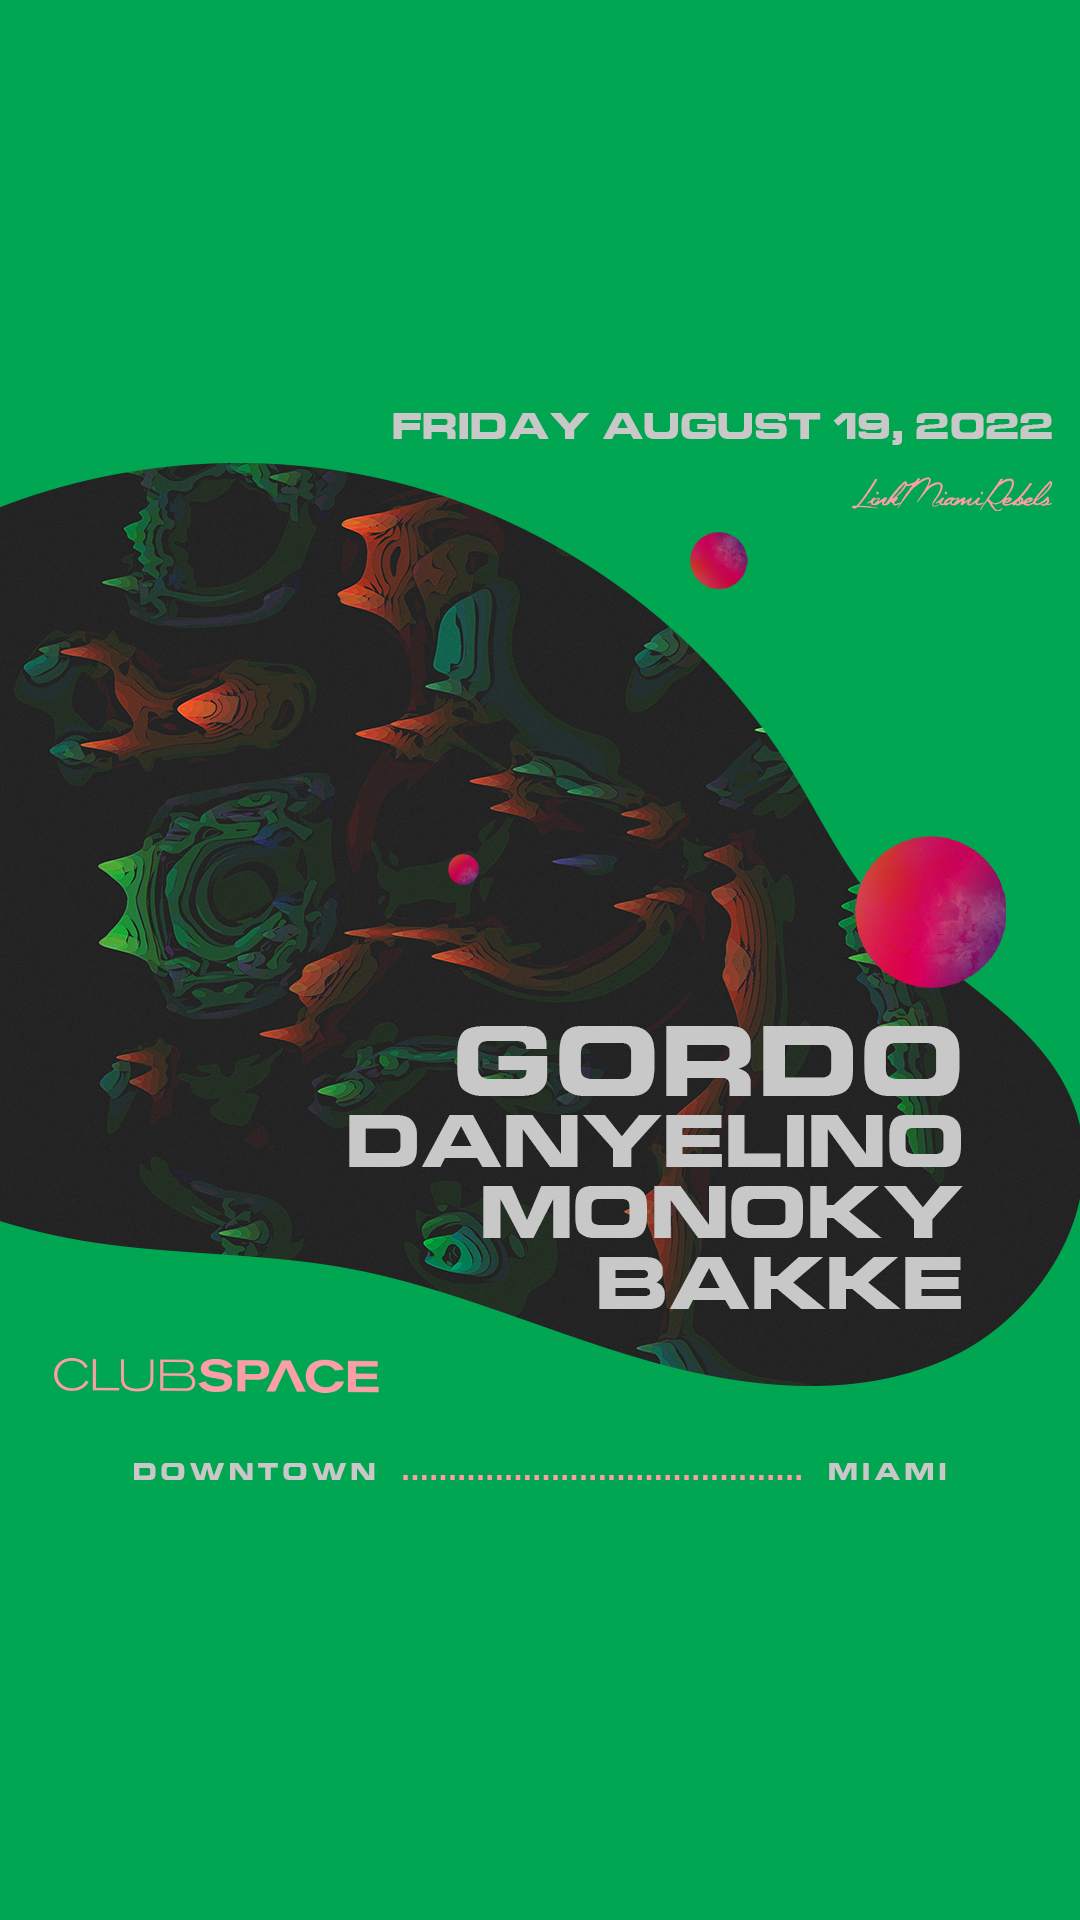 DIPLO @ Club Space Miami - Dj Set presented by Link Miami Rebels